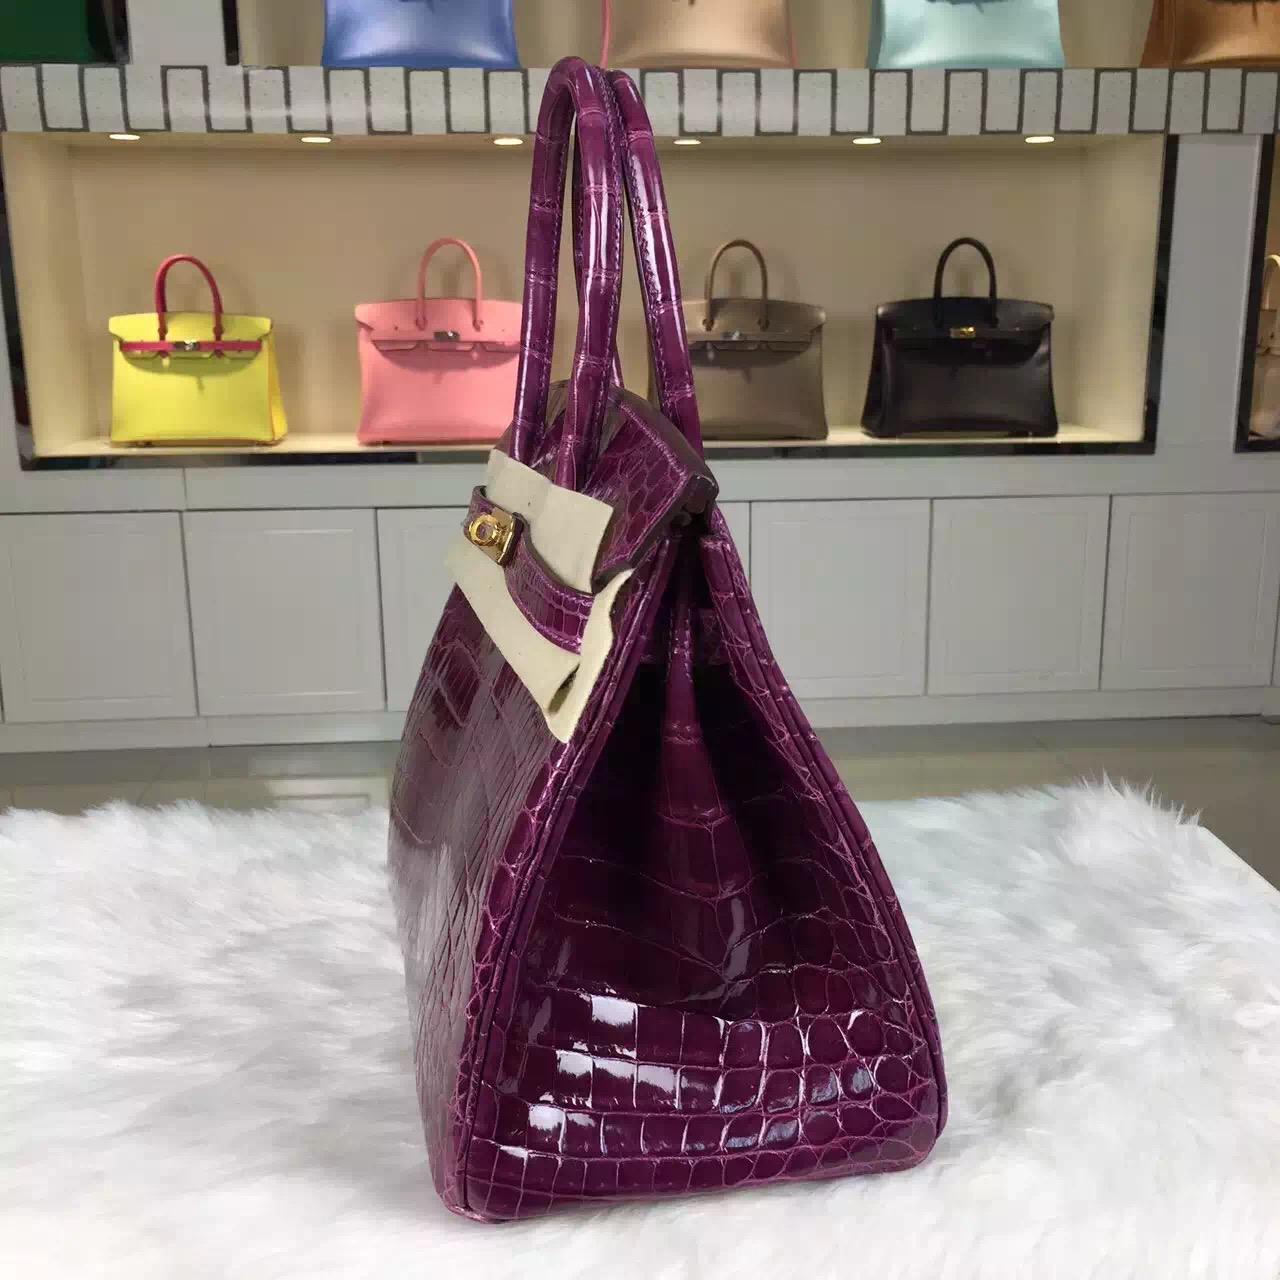 Discount Hermes Birkin Bag 30cm Grape Purple Crocodile Skin Leather Tote Bag